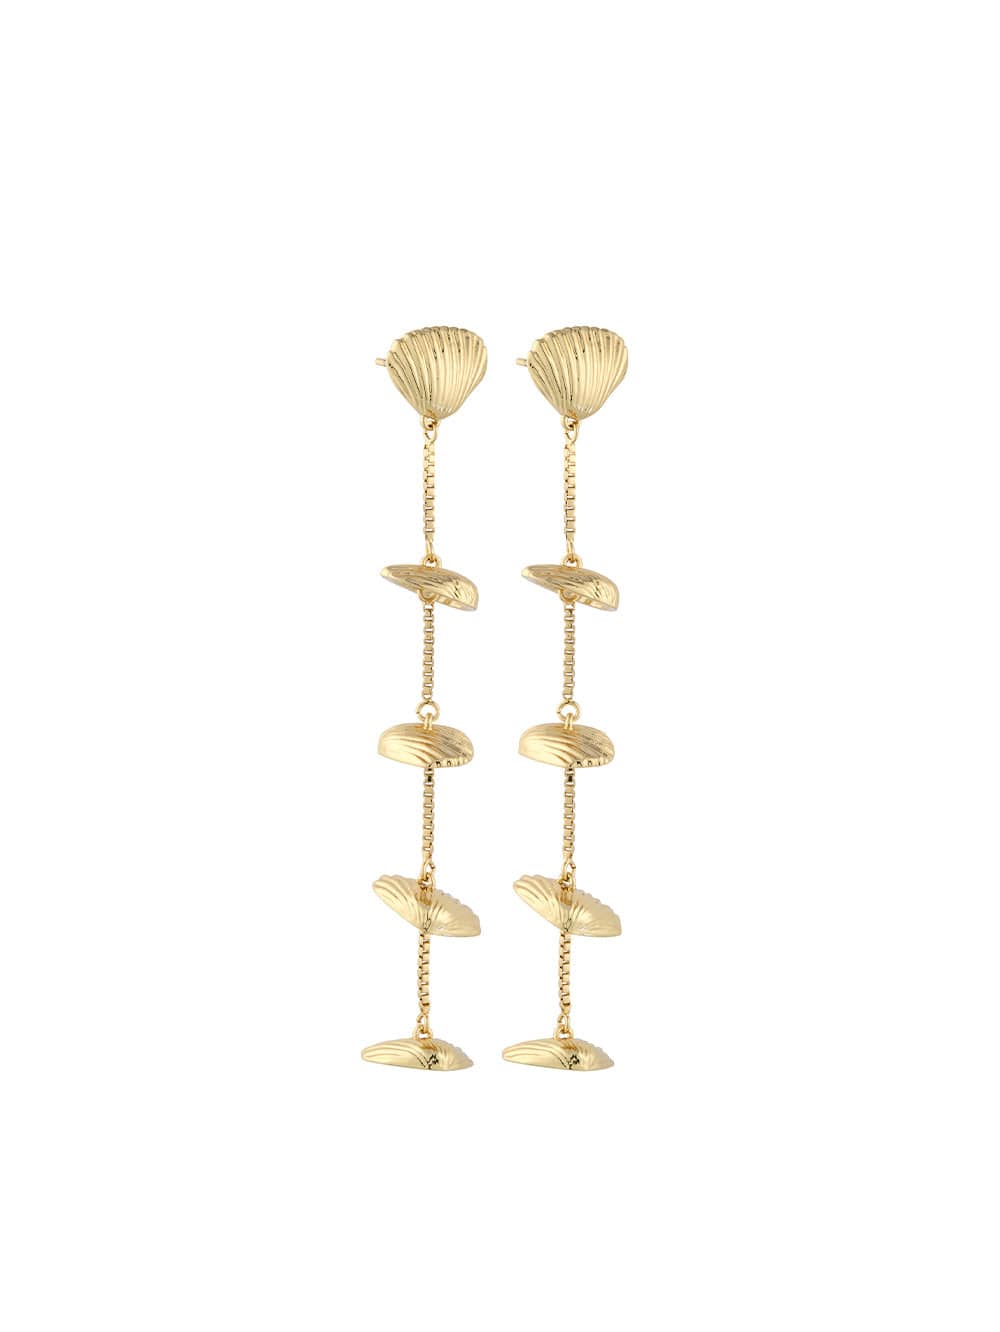 Thalassa Drop Earring KIVARI - Gold shell studs on gold chain studs